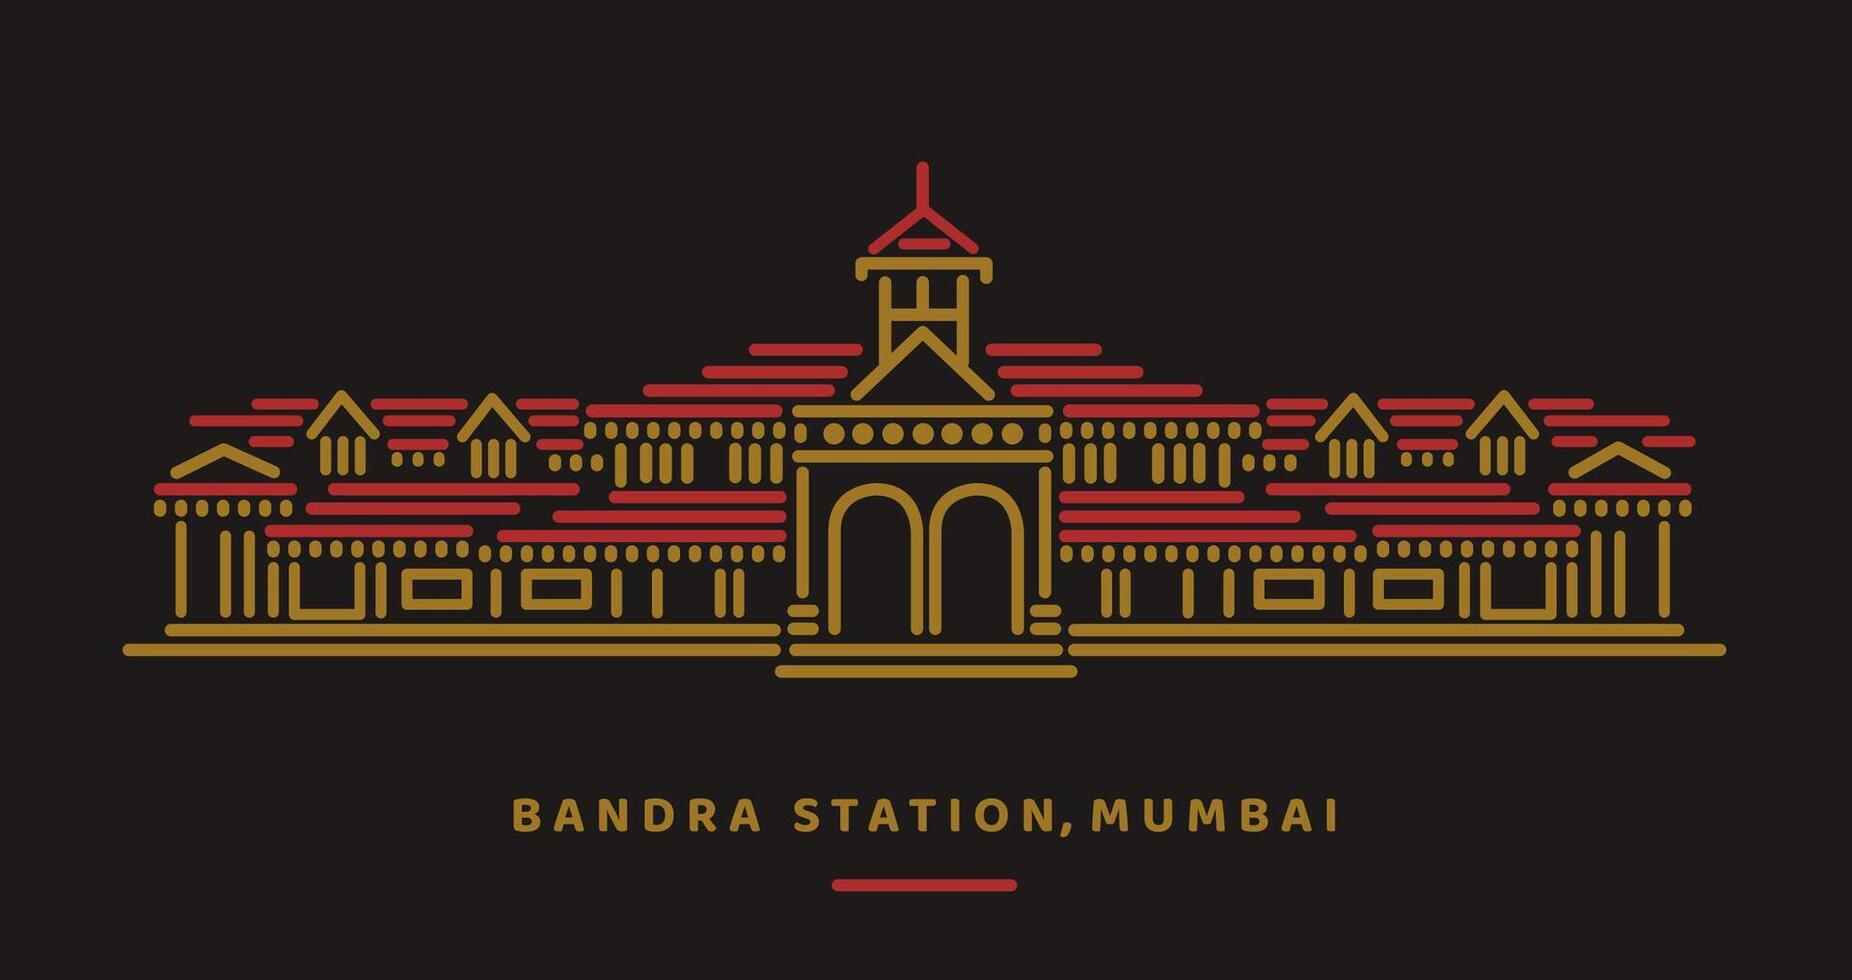 bandera chemin de fer station de mumbai illustration. vecteur